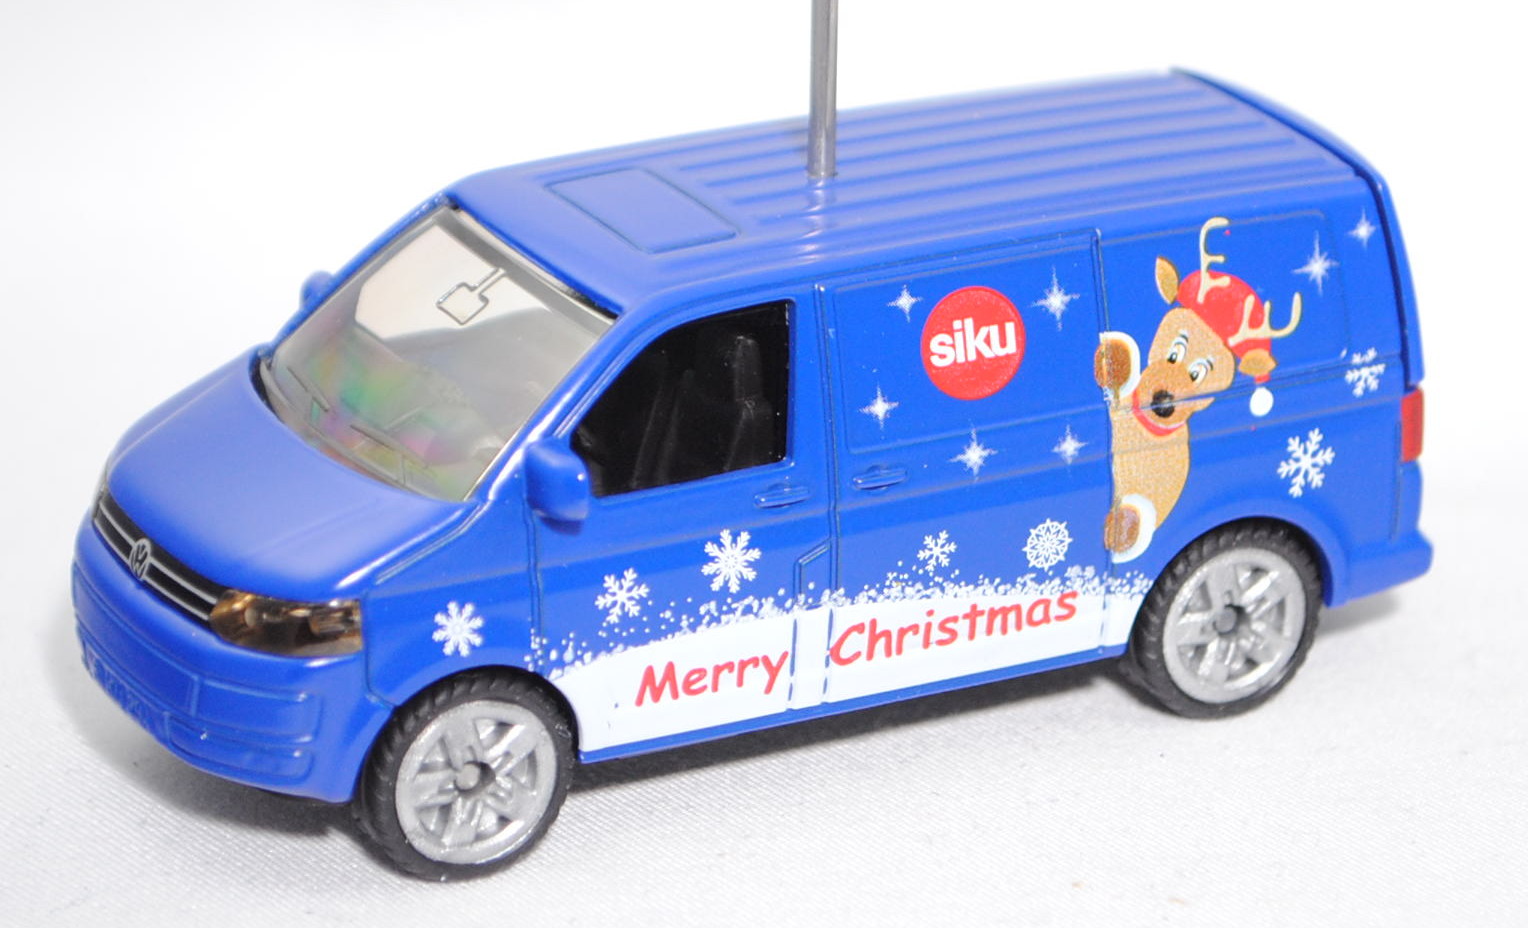 00439 VW T5 facelift Transporter 2.0 TDI, blau, Merry Christmas, m. Stern als Zettelhalter, Werbebox